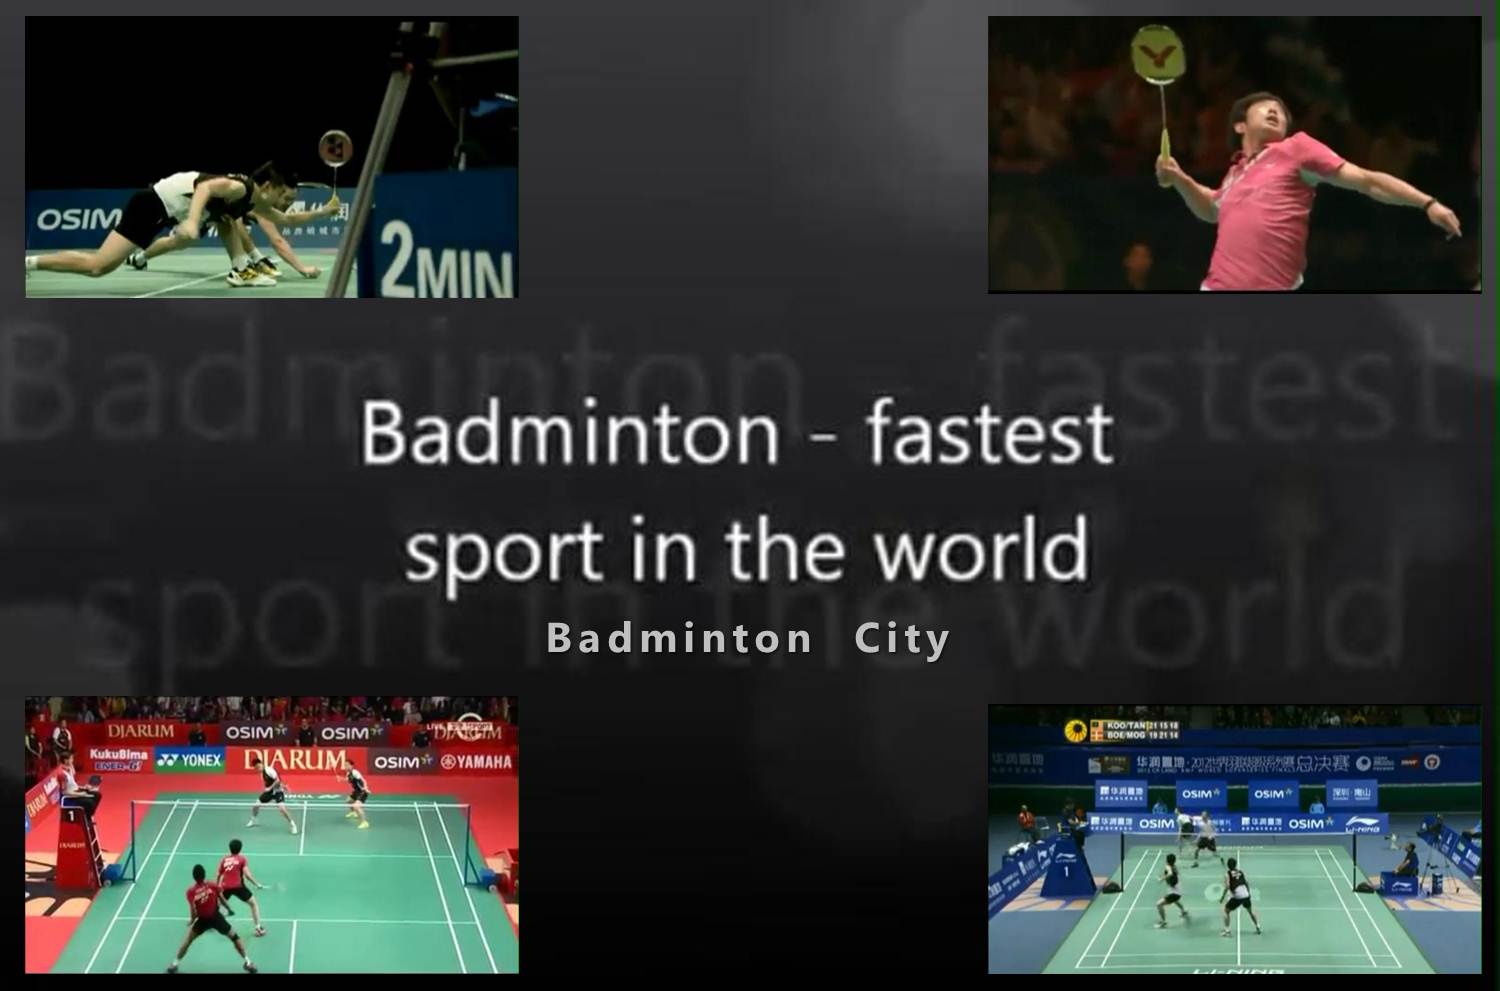 کلیپ بدمینتونی - Badminton - Fastest Sport in the World